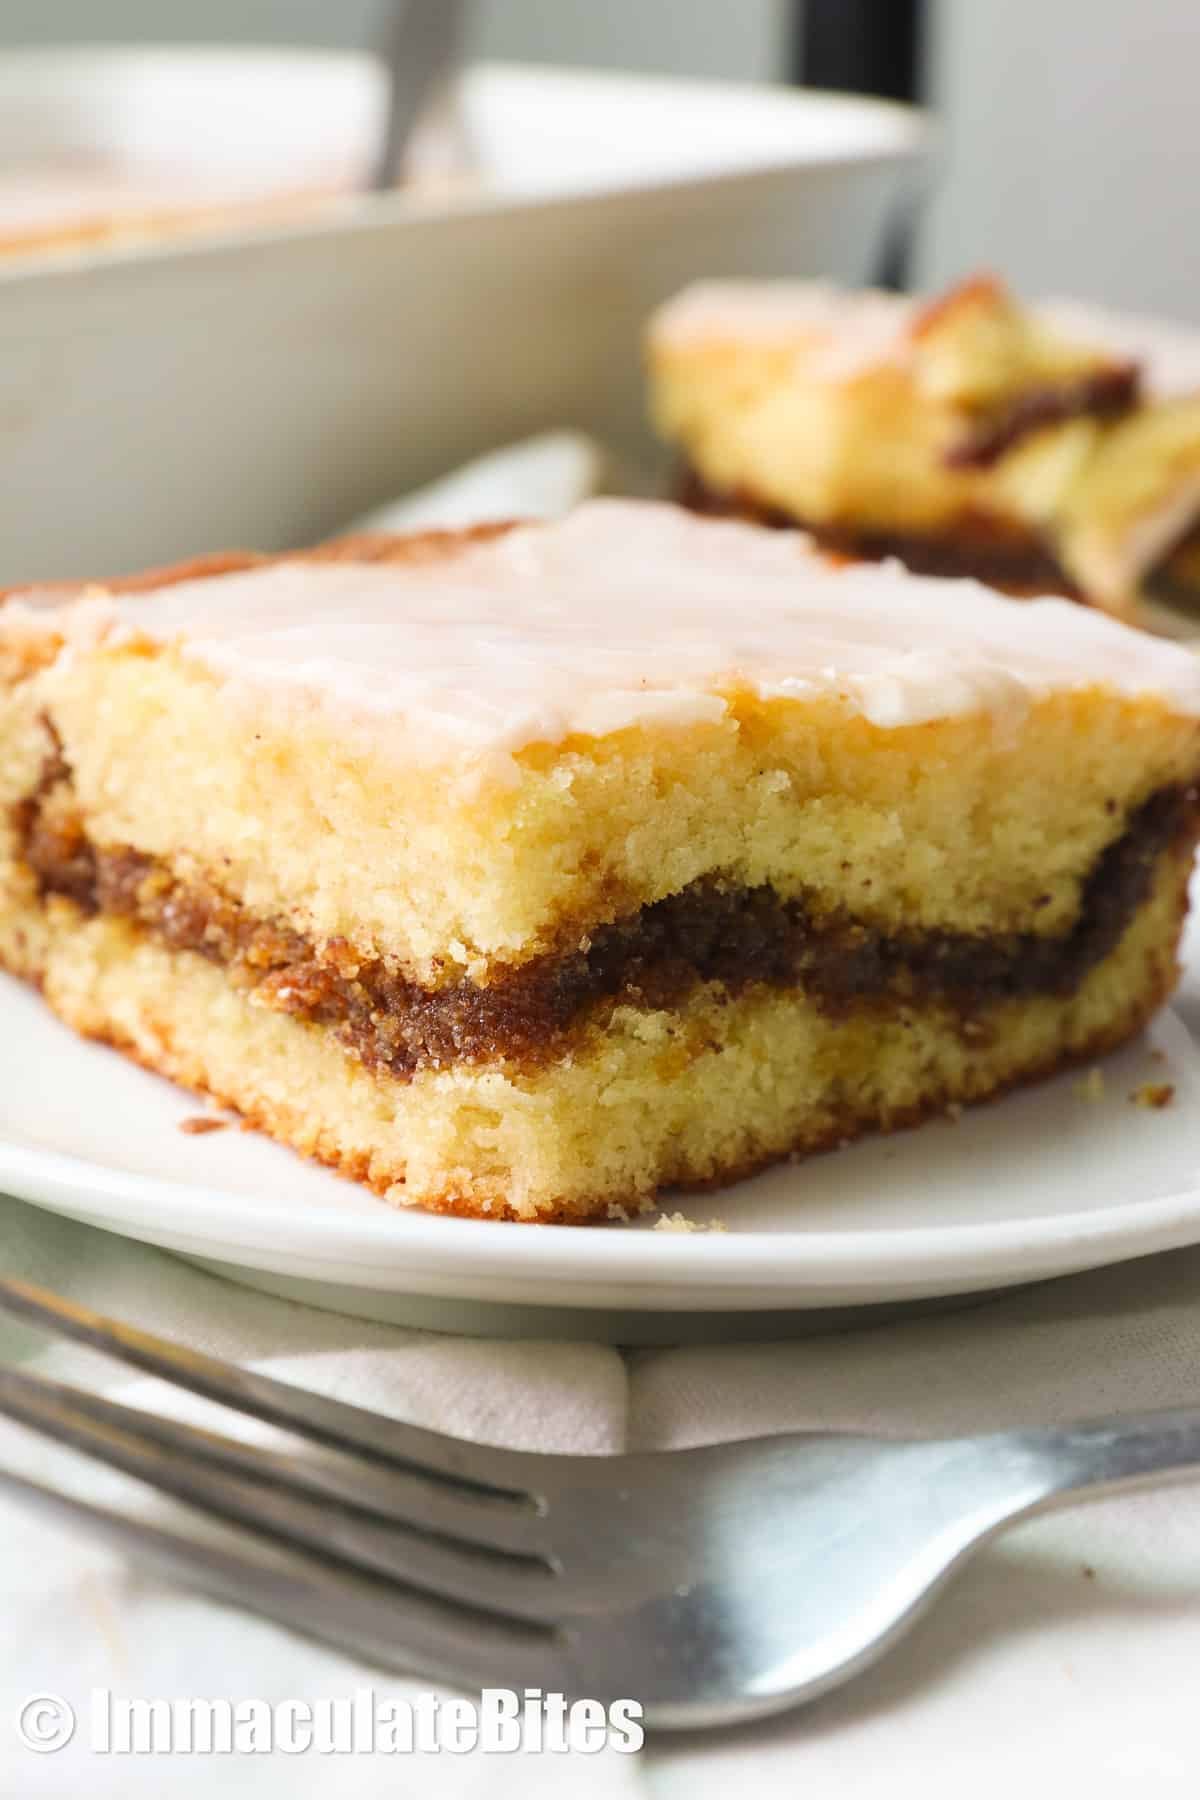 Honey bun cake with warm cinnamon swirls and a drizzle of decadent vanilla glaze